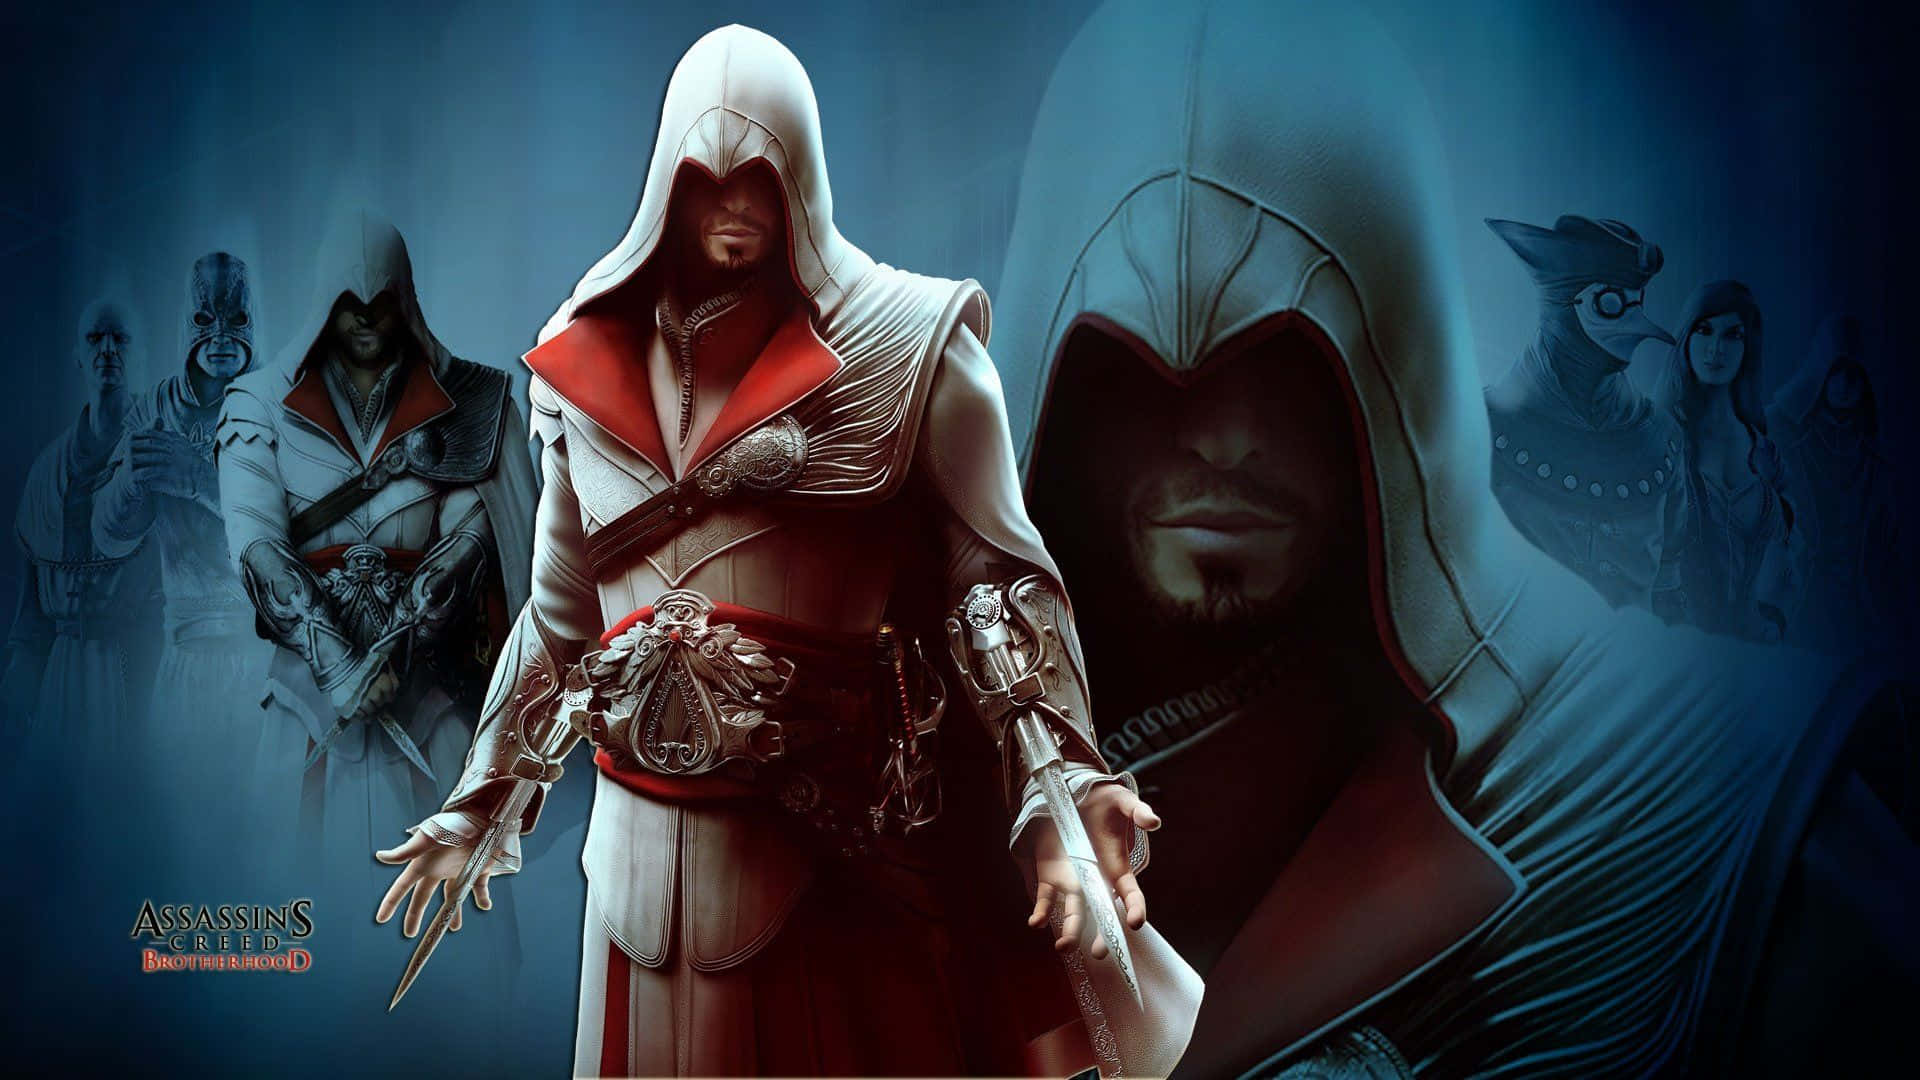 Assassin's Creed Brotherhood - Intense Action Scene Wallpaper